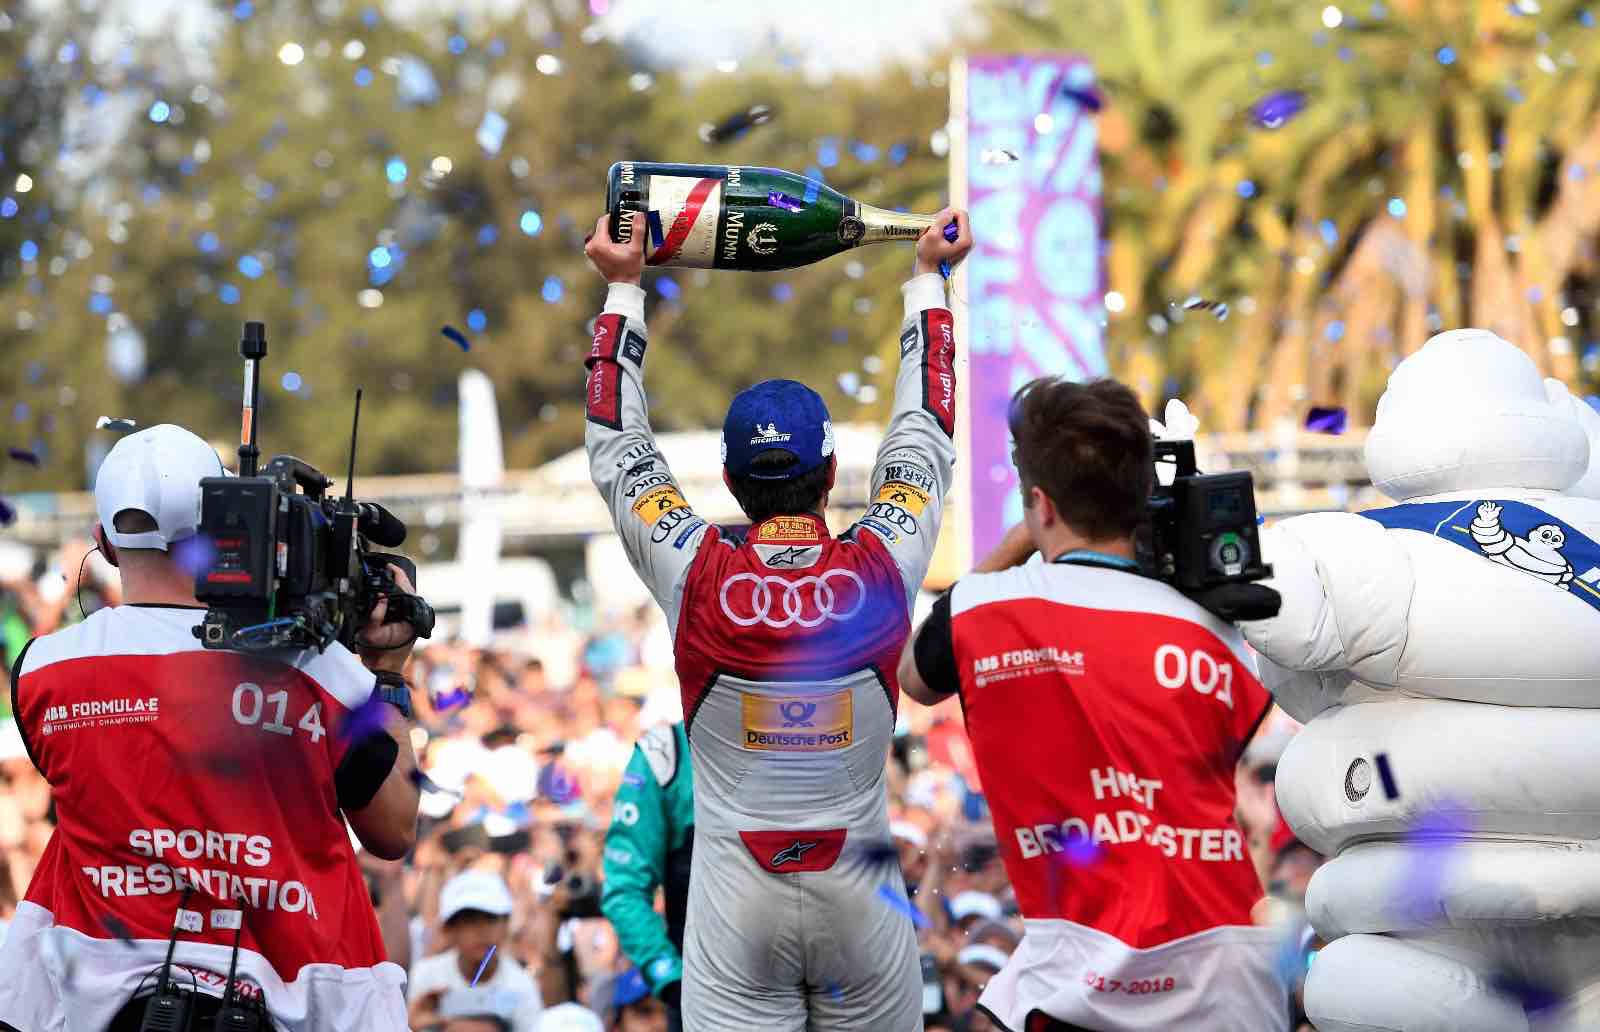 La Maison de champagne Mumm celebra a Daniel Abt, ganador en la Fórmula E en la Ciudad de México